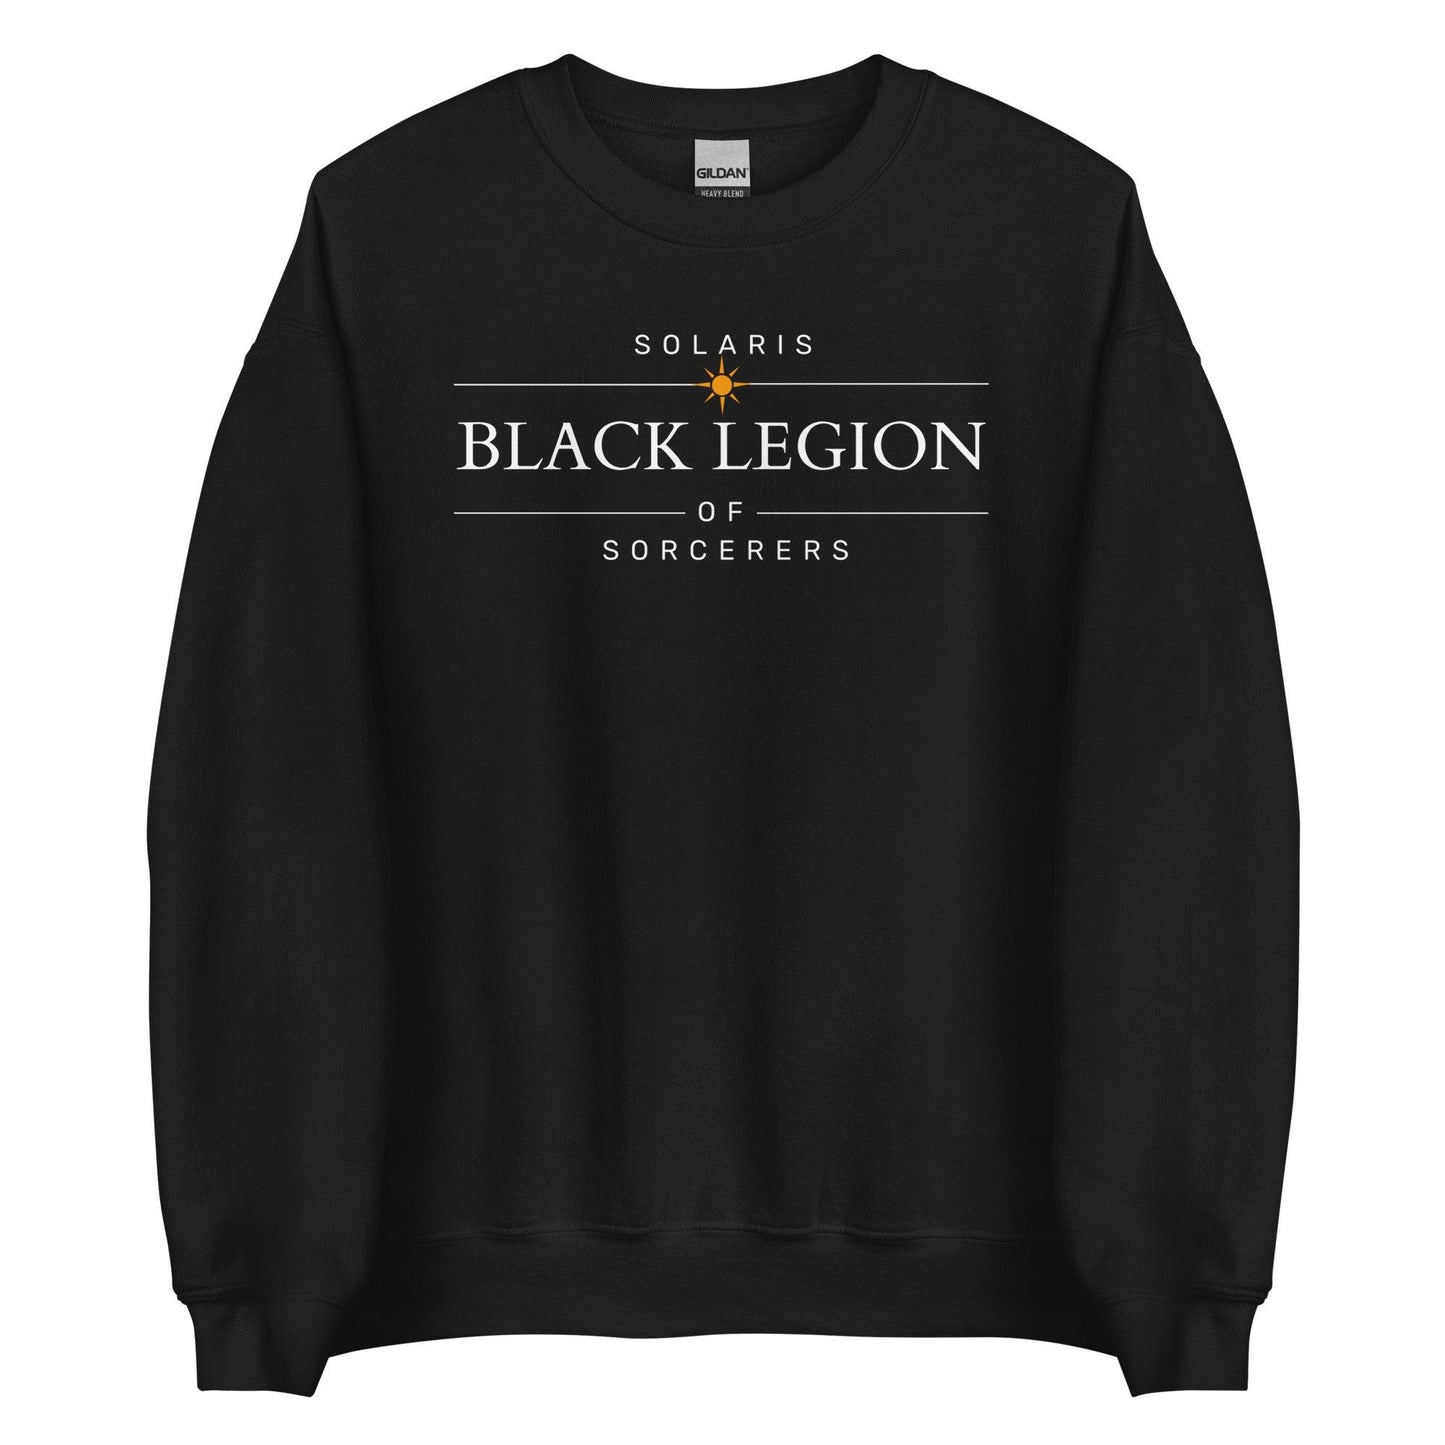 Black Legion Sorcerer Sweatshirt - The Bean Workshop - air awakens, elise kova, sweatshirt